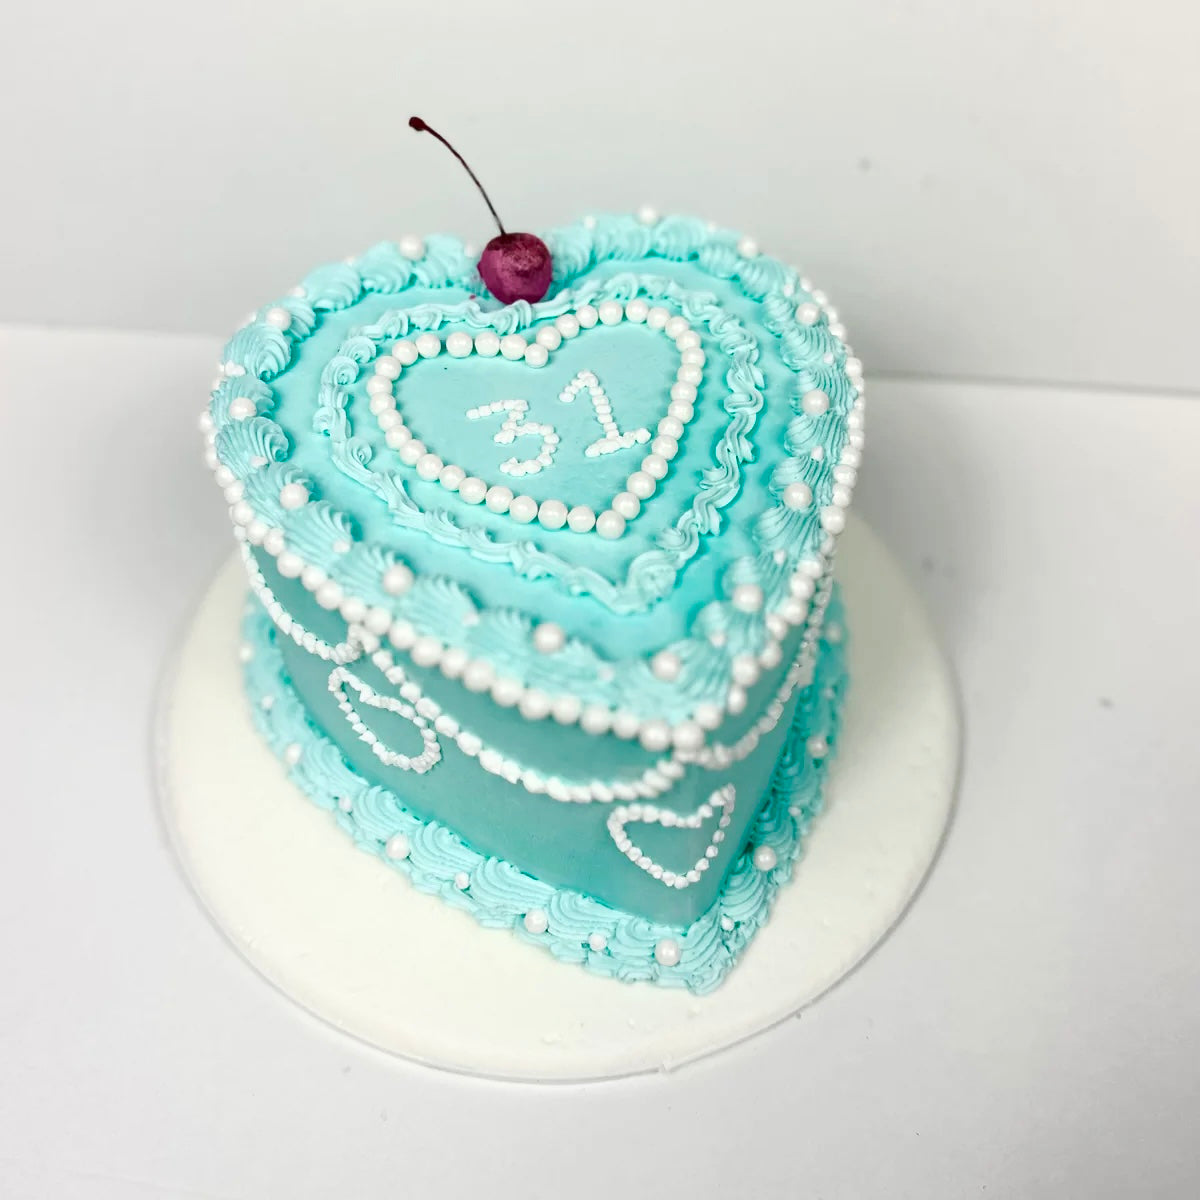 Mini heart cakes pops valentines desserts - Merriment Design